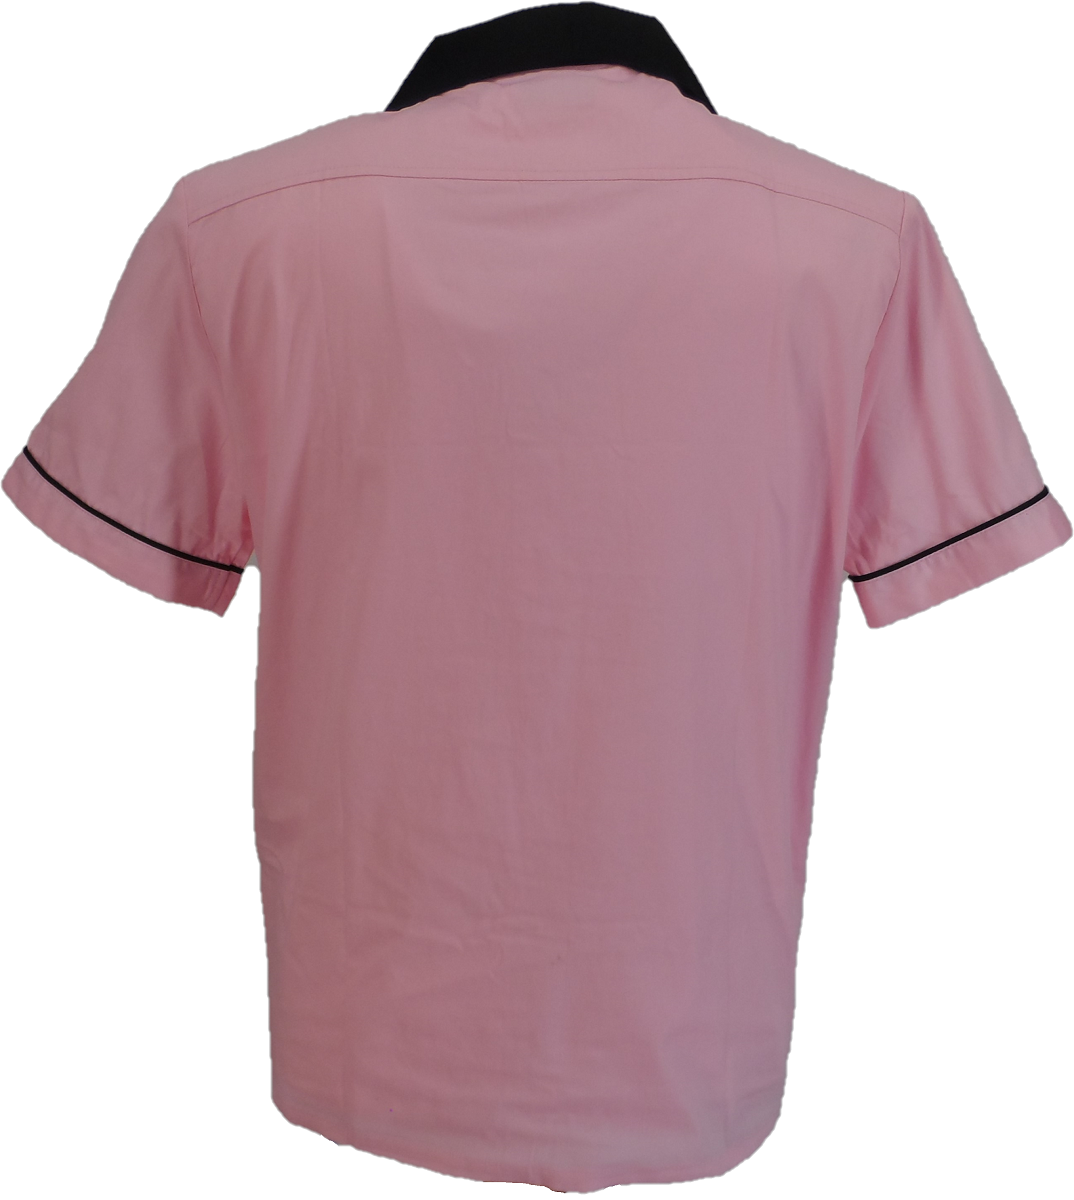 Bowling Shirts روكابيلي الوردية الرجعية للرجال Mazeys